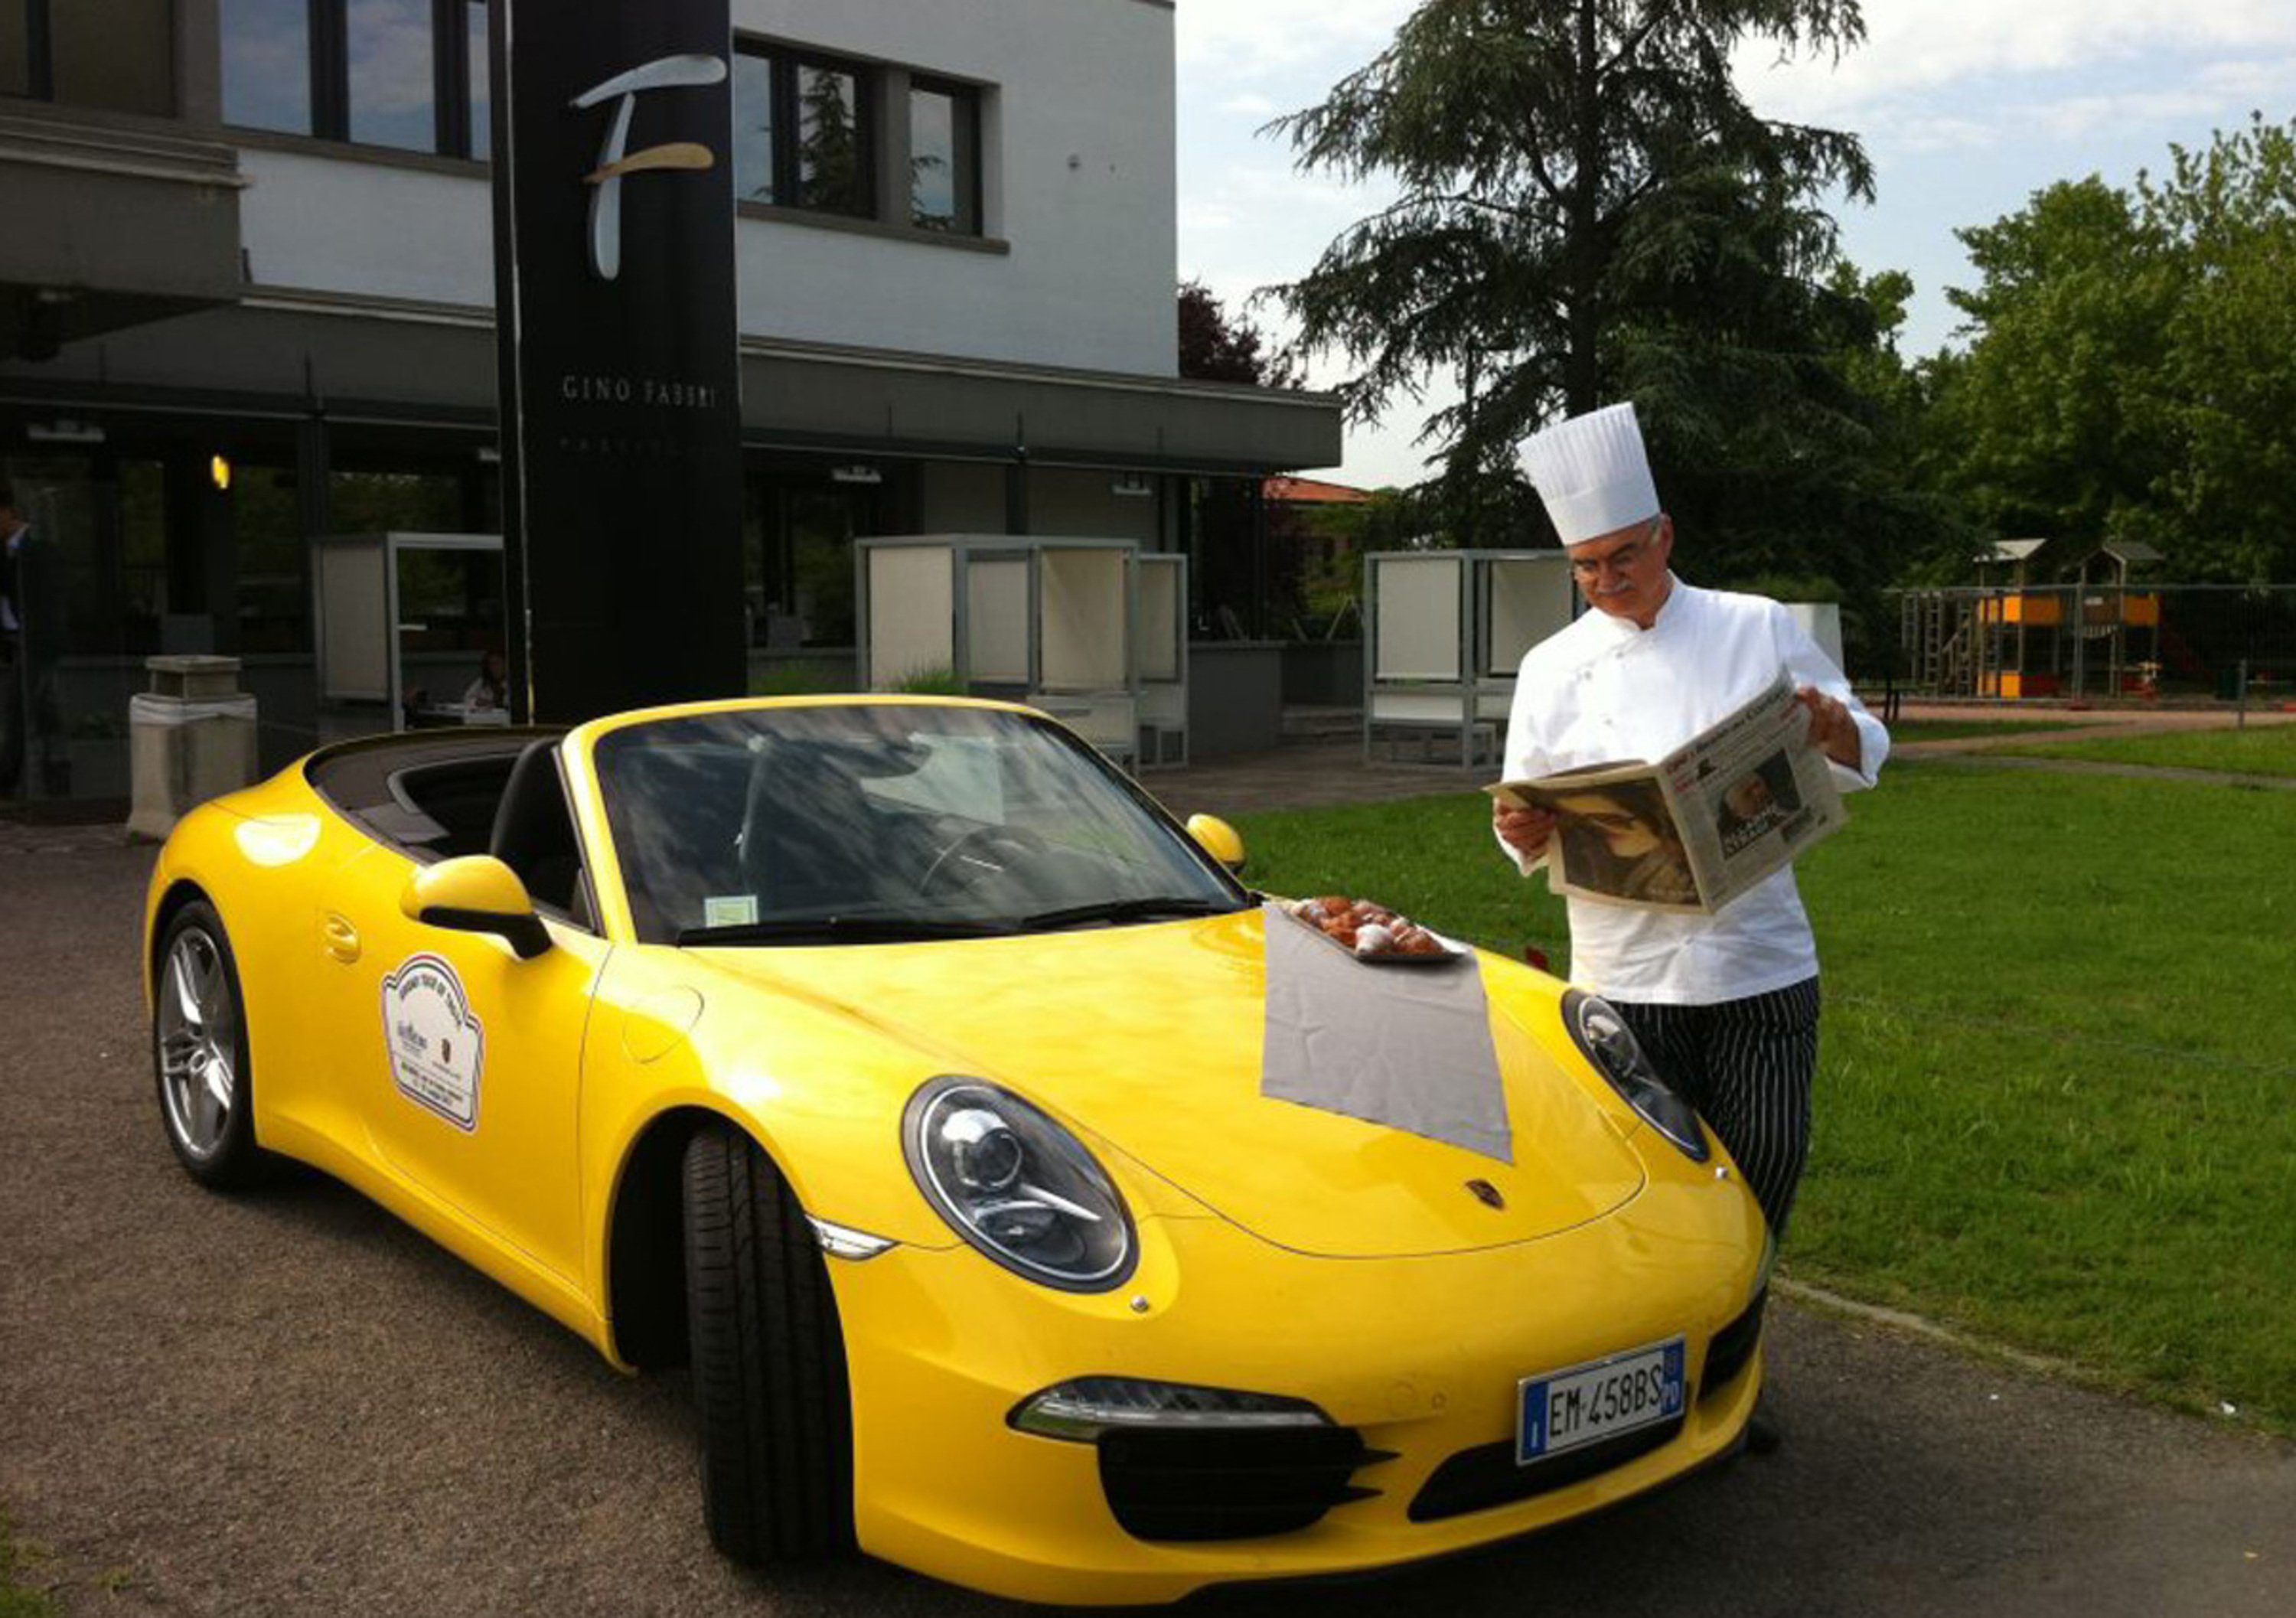 Porsche Grand Tour of Taste. Day 1